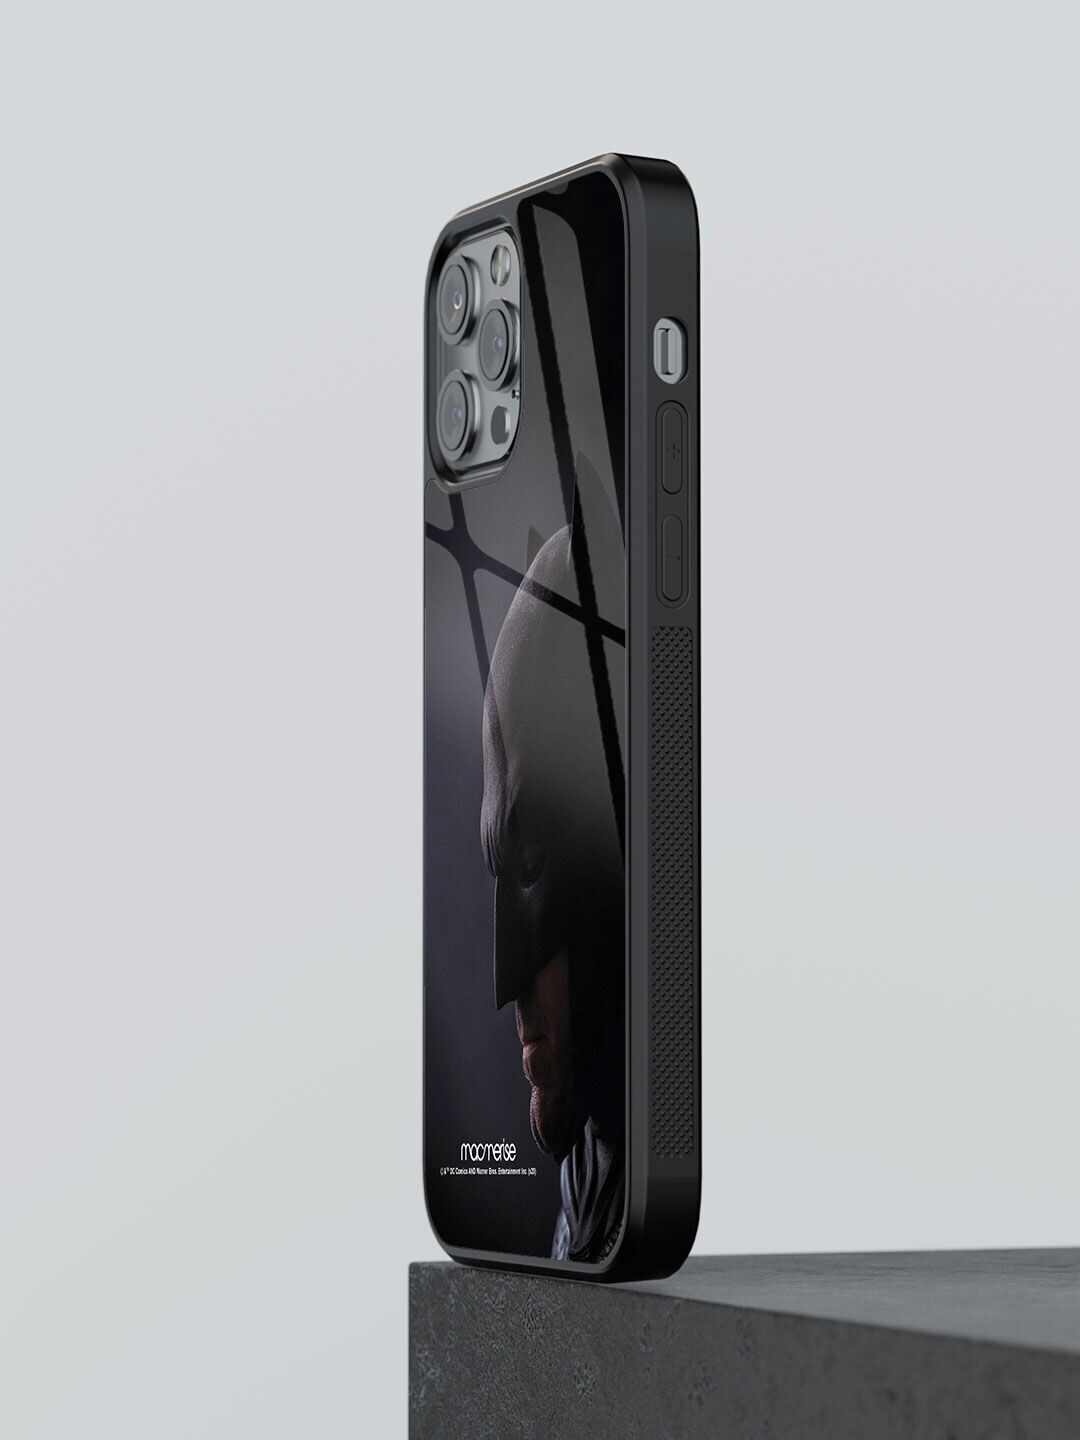 macmerise Black Brutal Batman iPhone 12 Pro Max Back Case Price in India